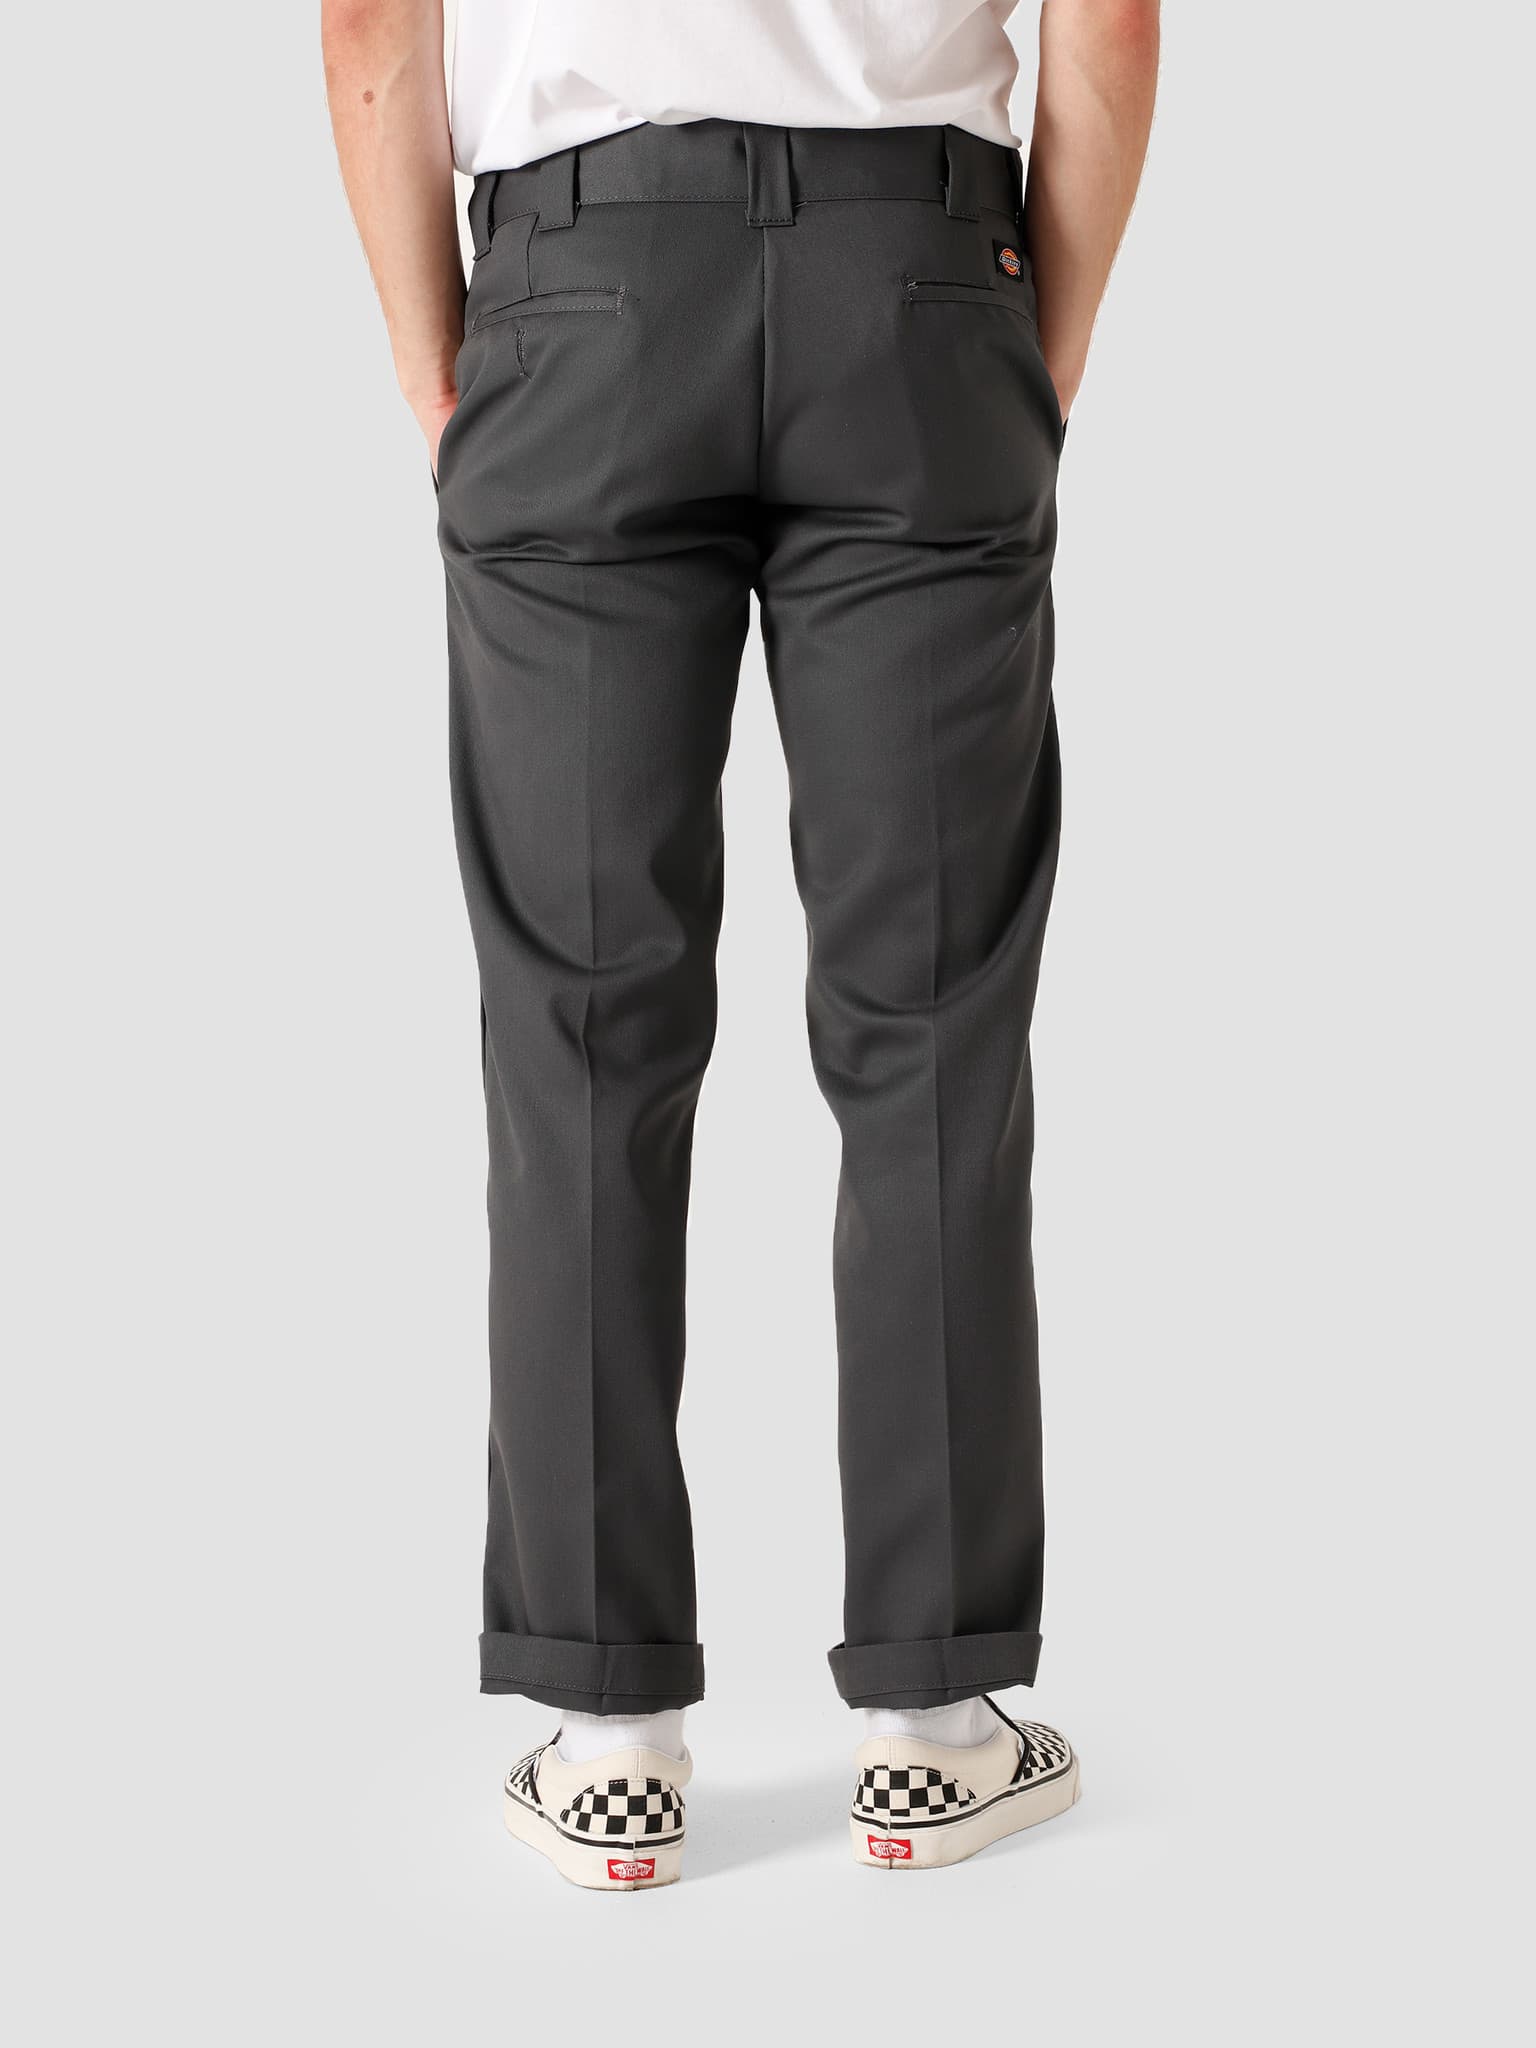 Slim Straight Work Pant Charcoal Grey DK0WP873CH01